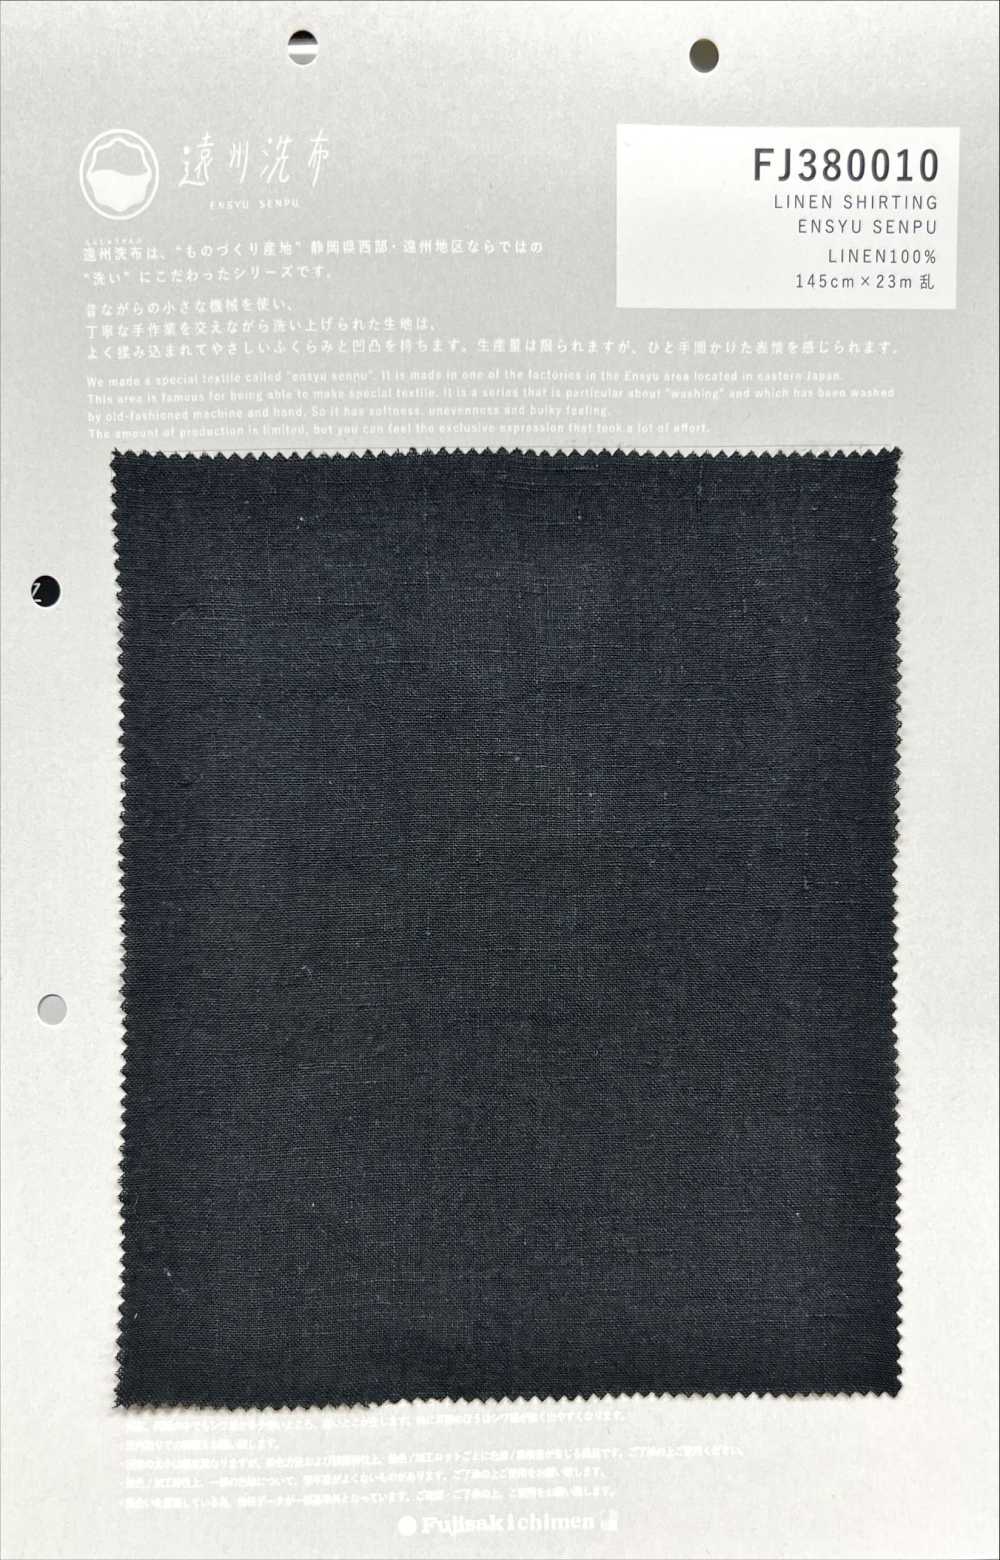 FJ380010 CAMISA DE LINO ENSYU SENPU[Fabrica Textil] Fujisaki Textile